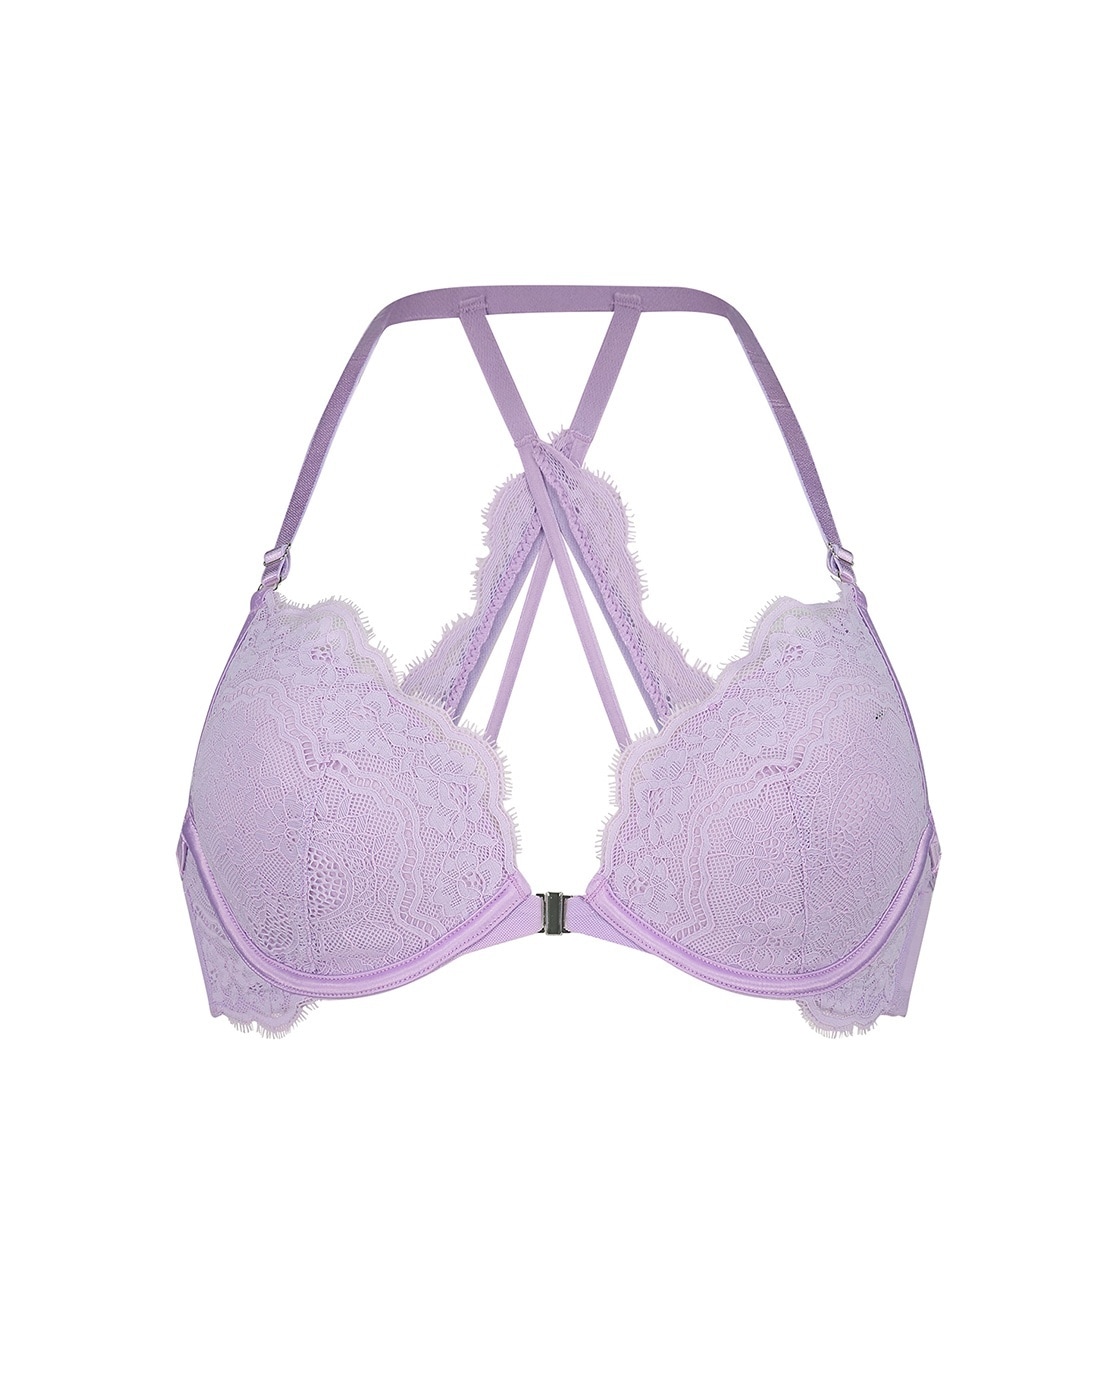 Auden, Intimates & Sleepwear, New Auden 32aa Bra Padded Push Up Plunge  Convertible Straps Lavender Lace Purple